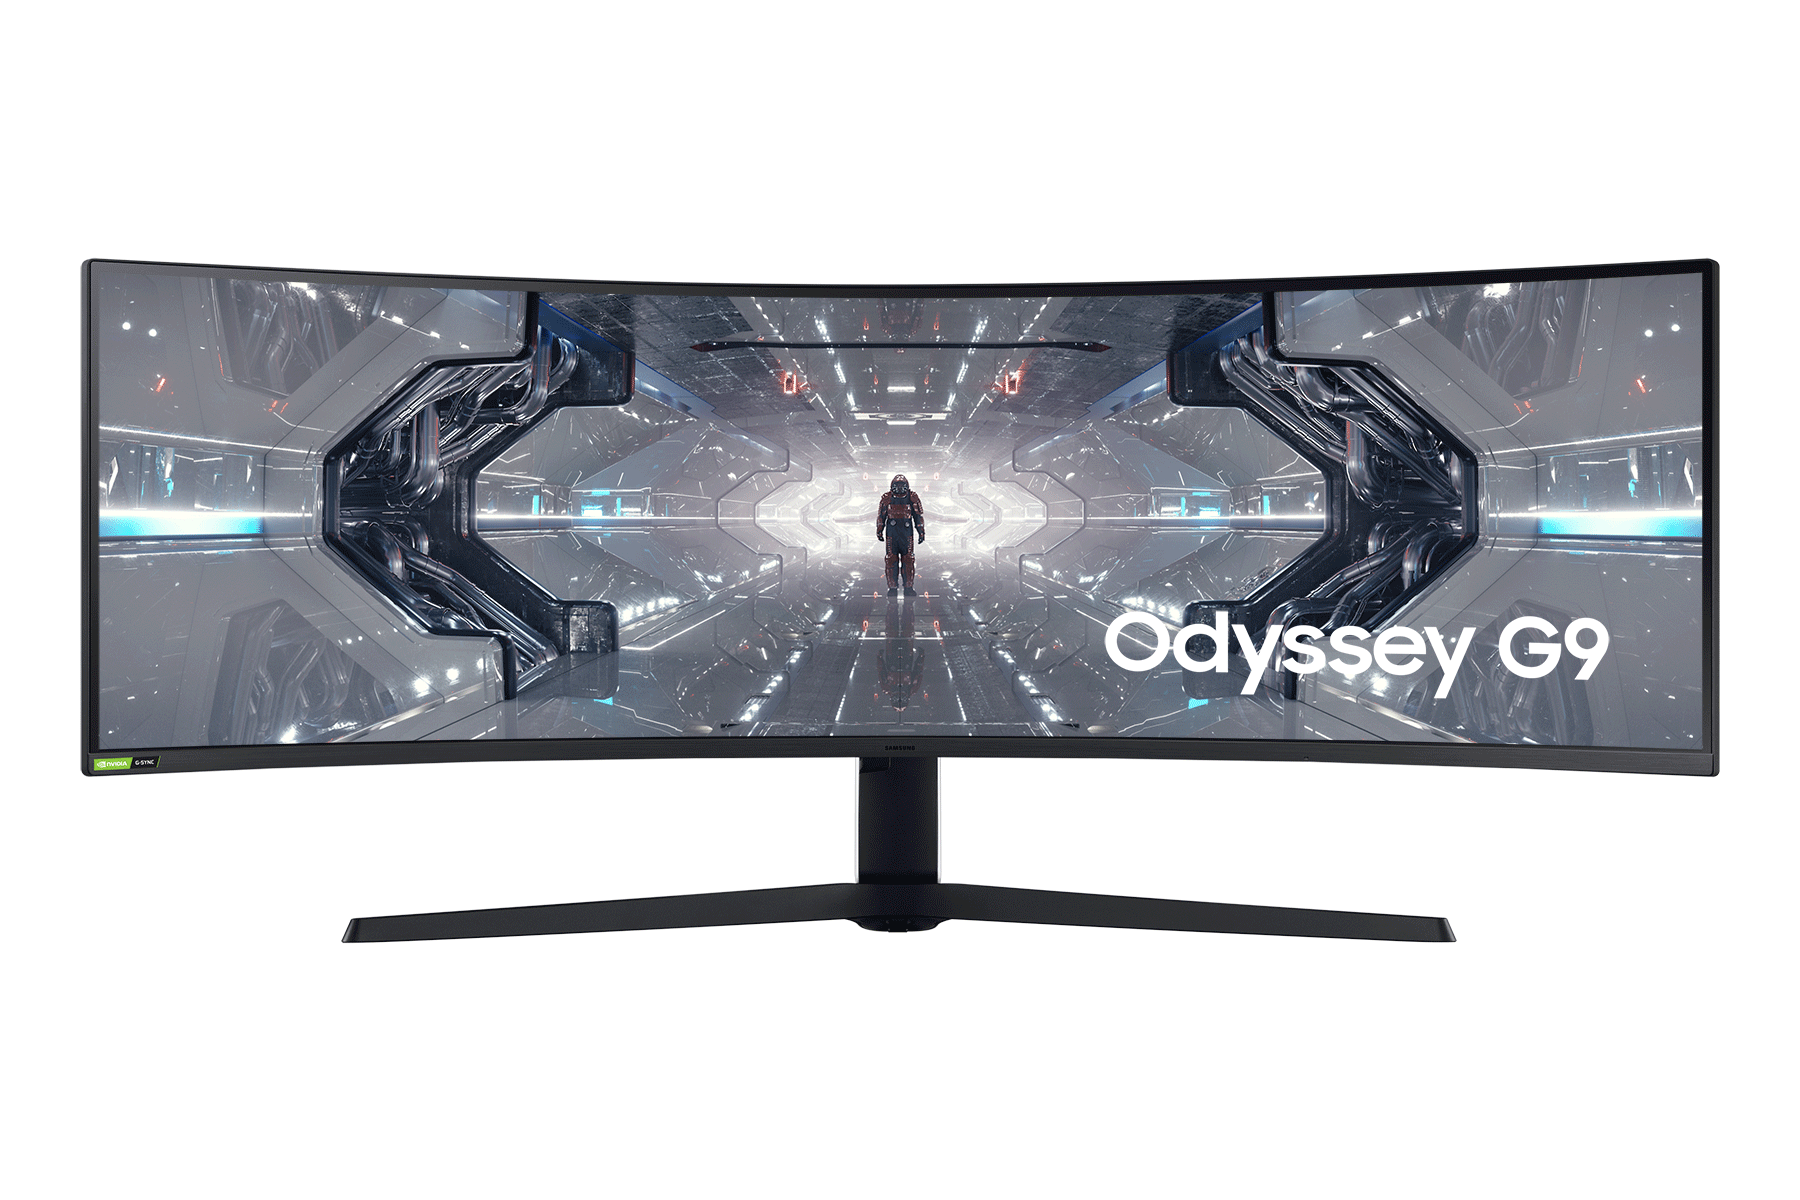 Buy Odyssey G9 Gaming Monitor Price Samsung Philippines